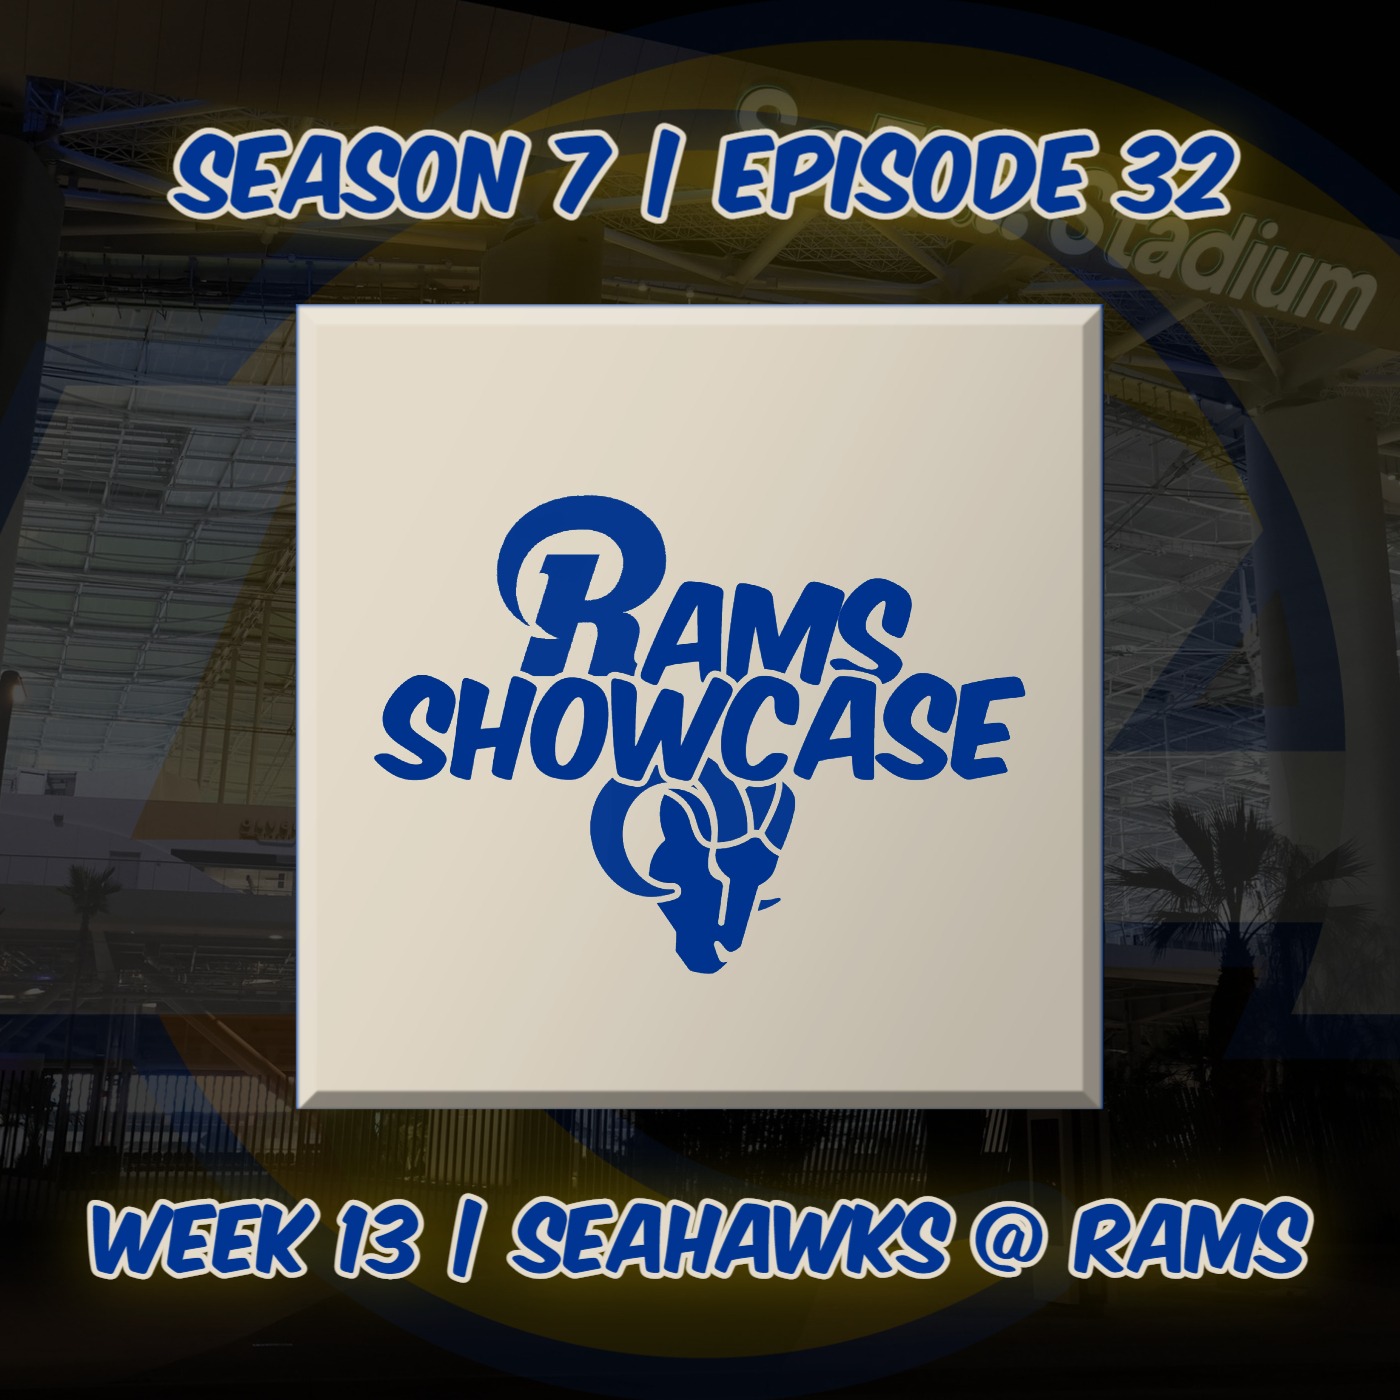 Rams Showcase | Seahawks @ Rams - Week 13 | FULL PODCAST